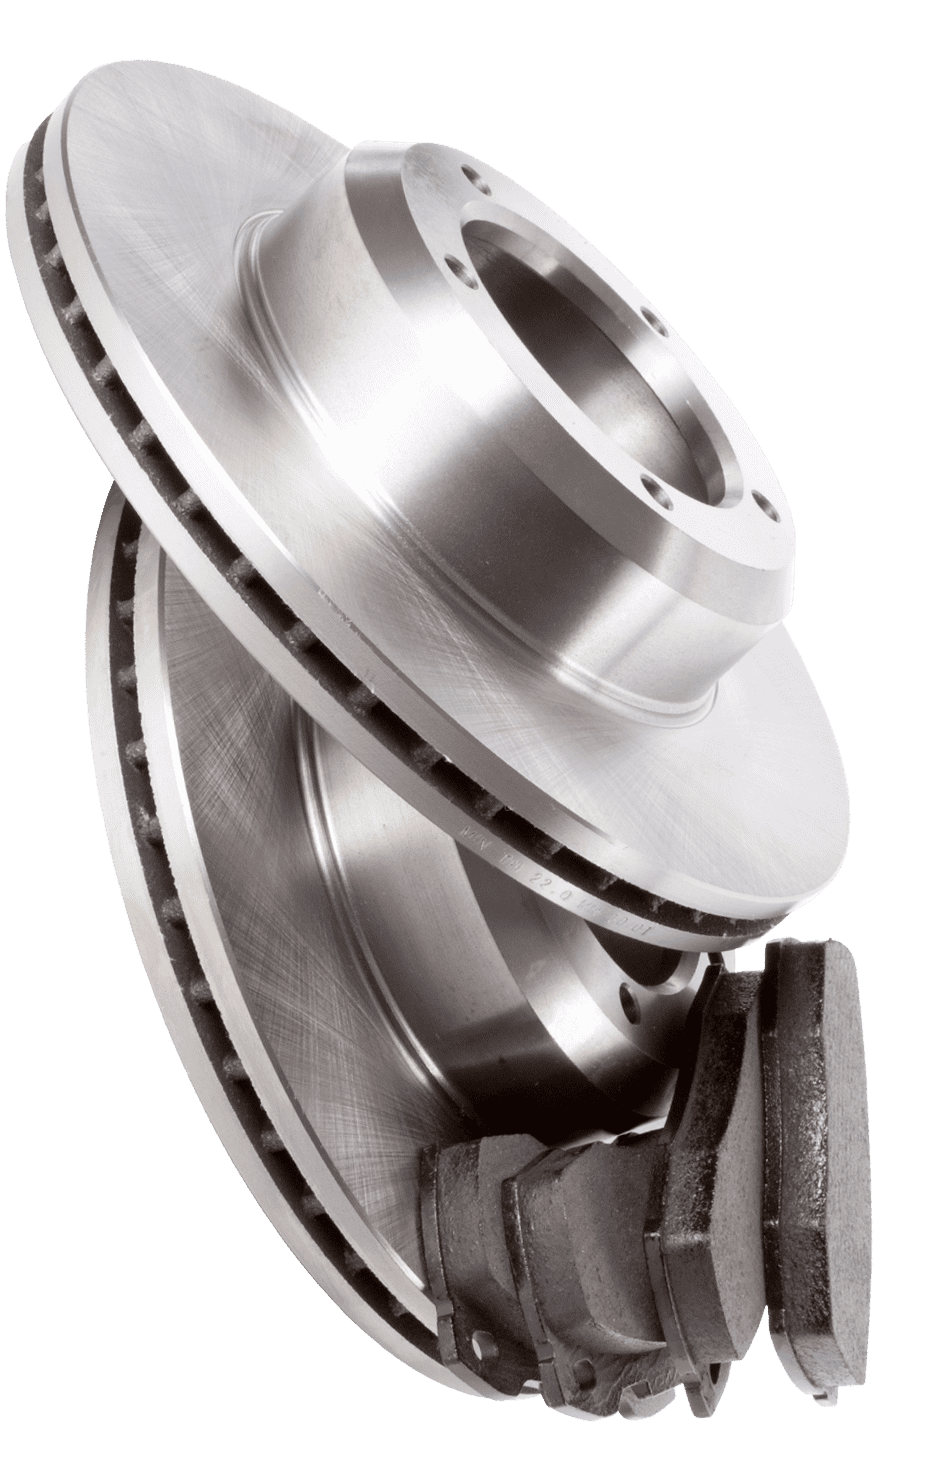 Automotive brake discs